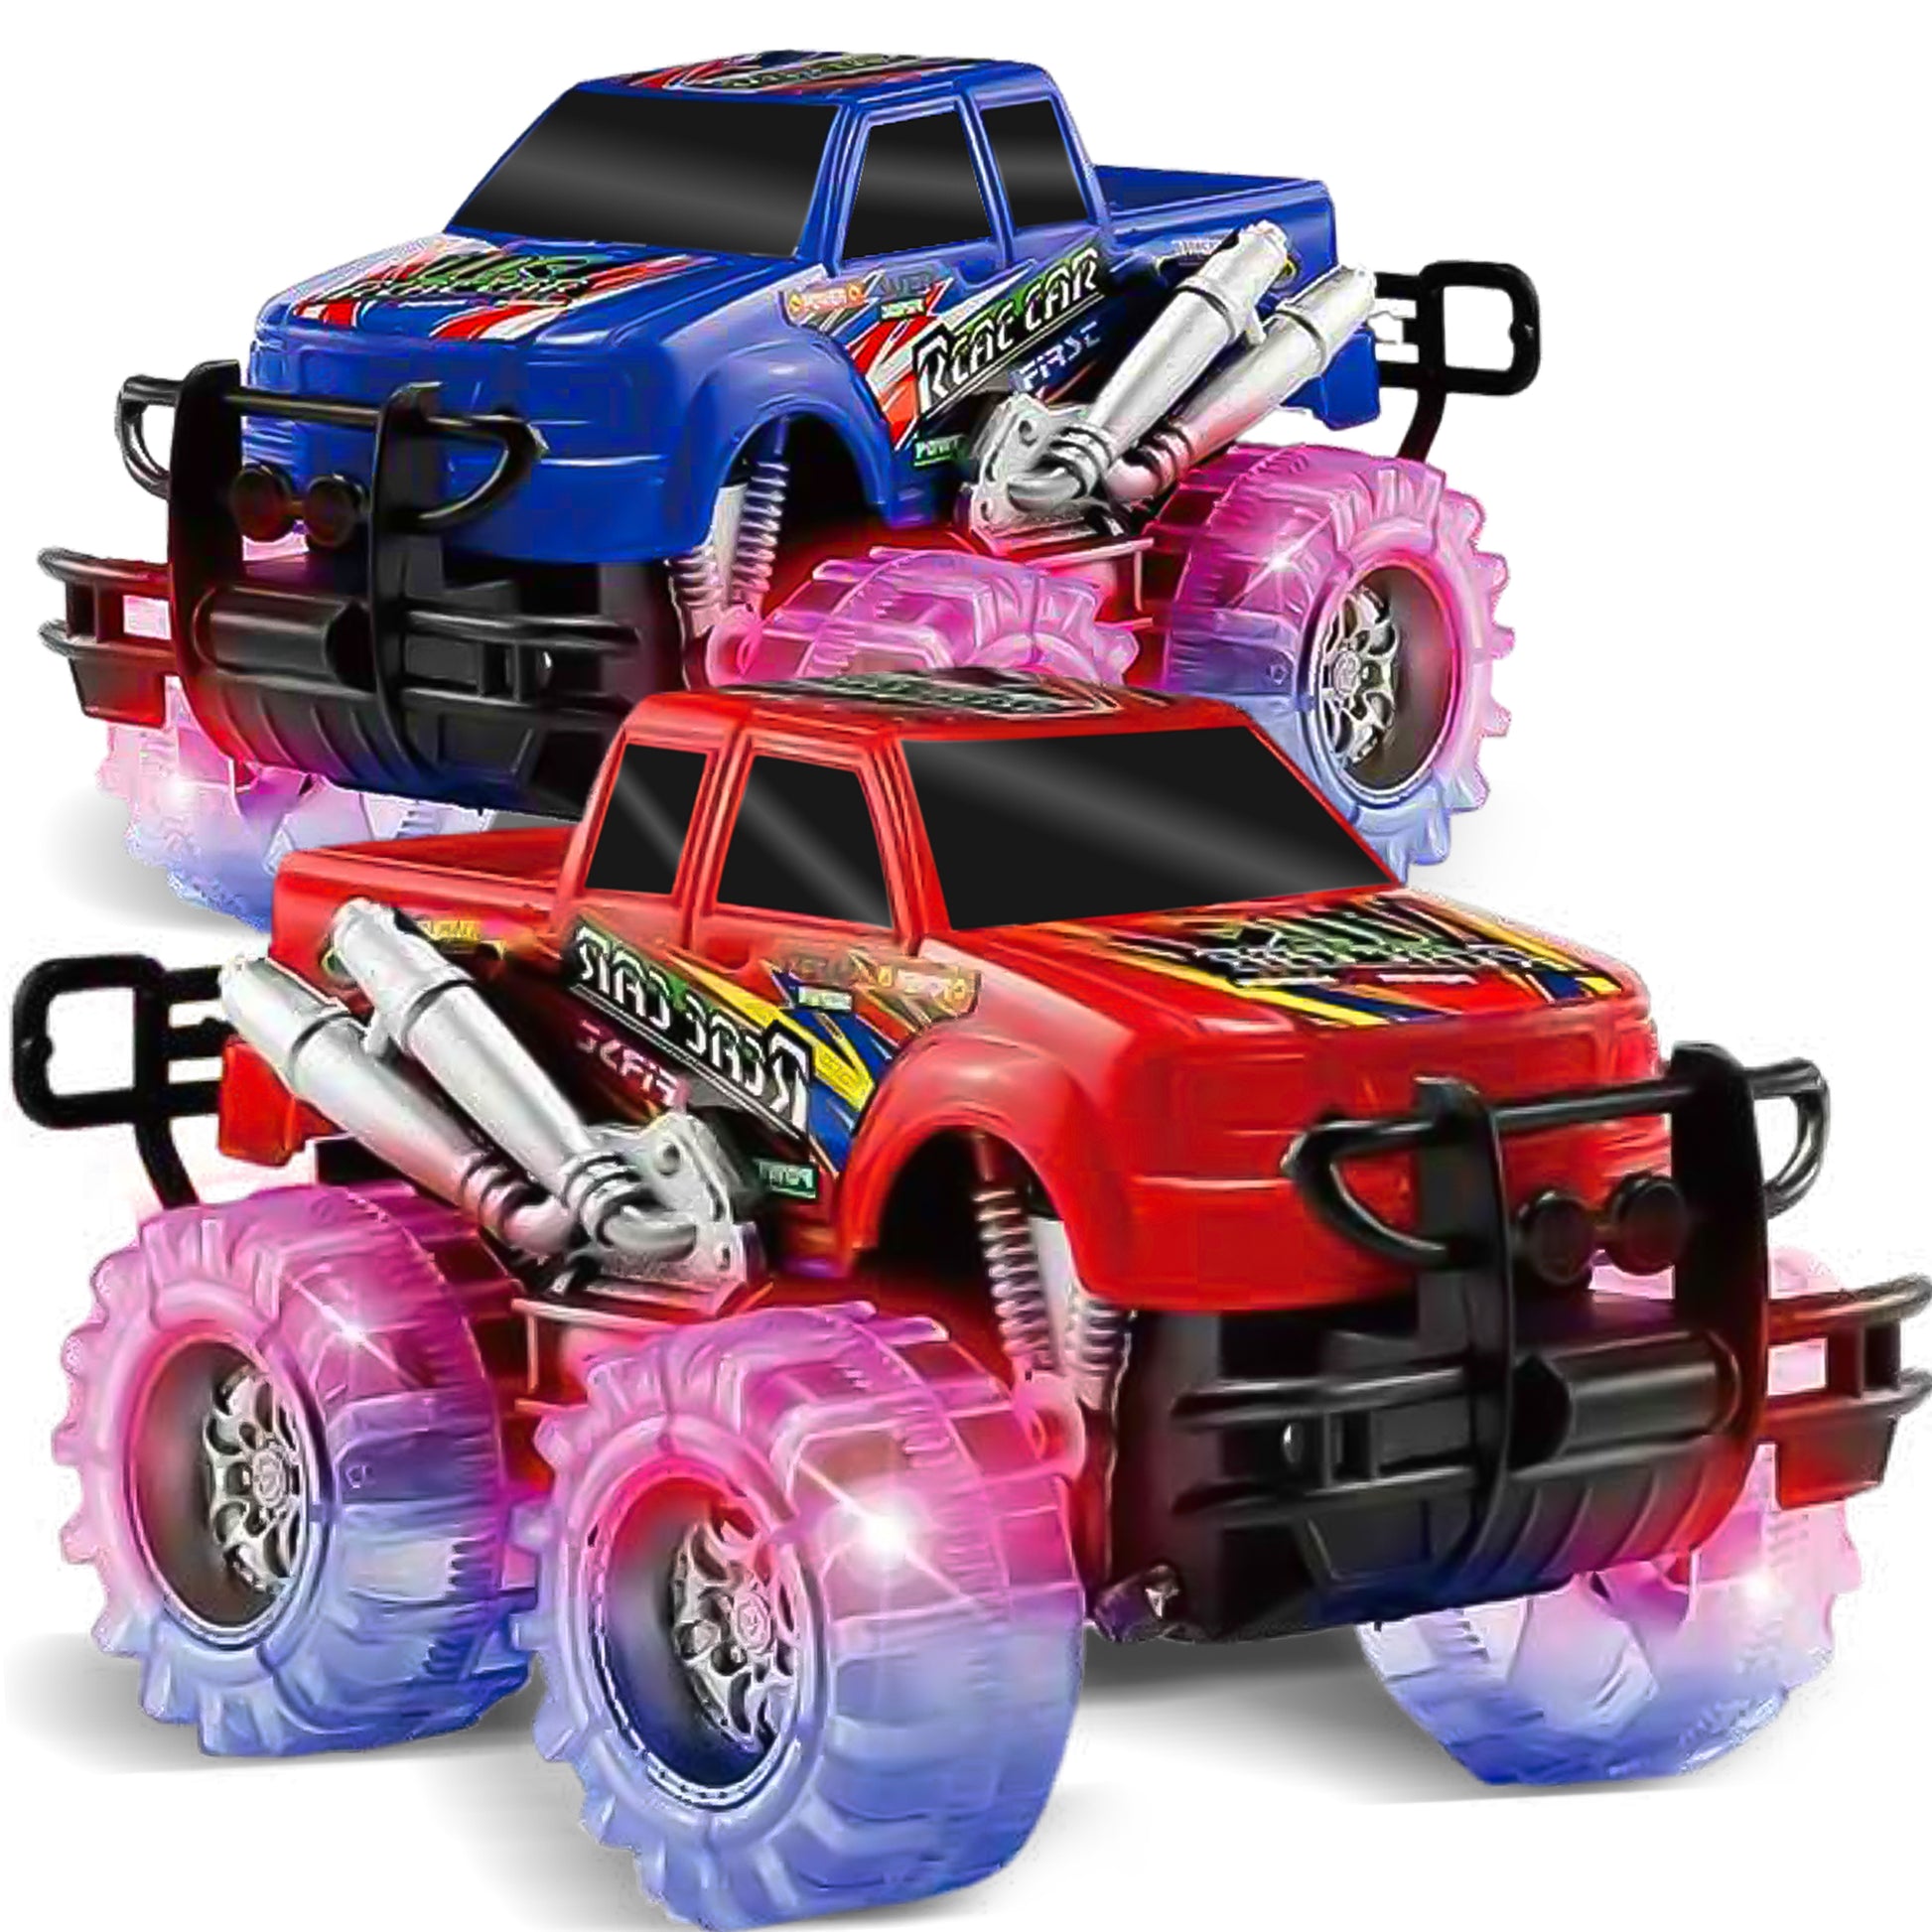 Monster truck toy set for kids